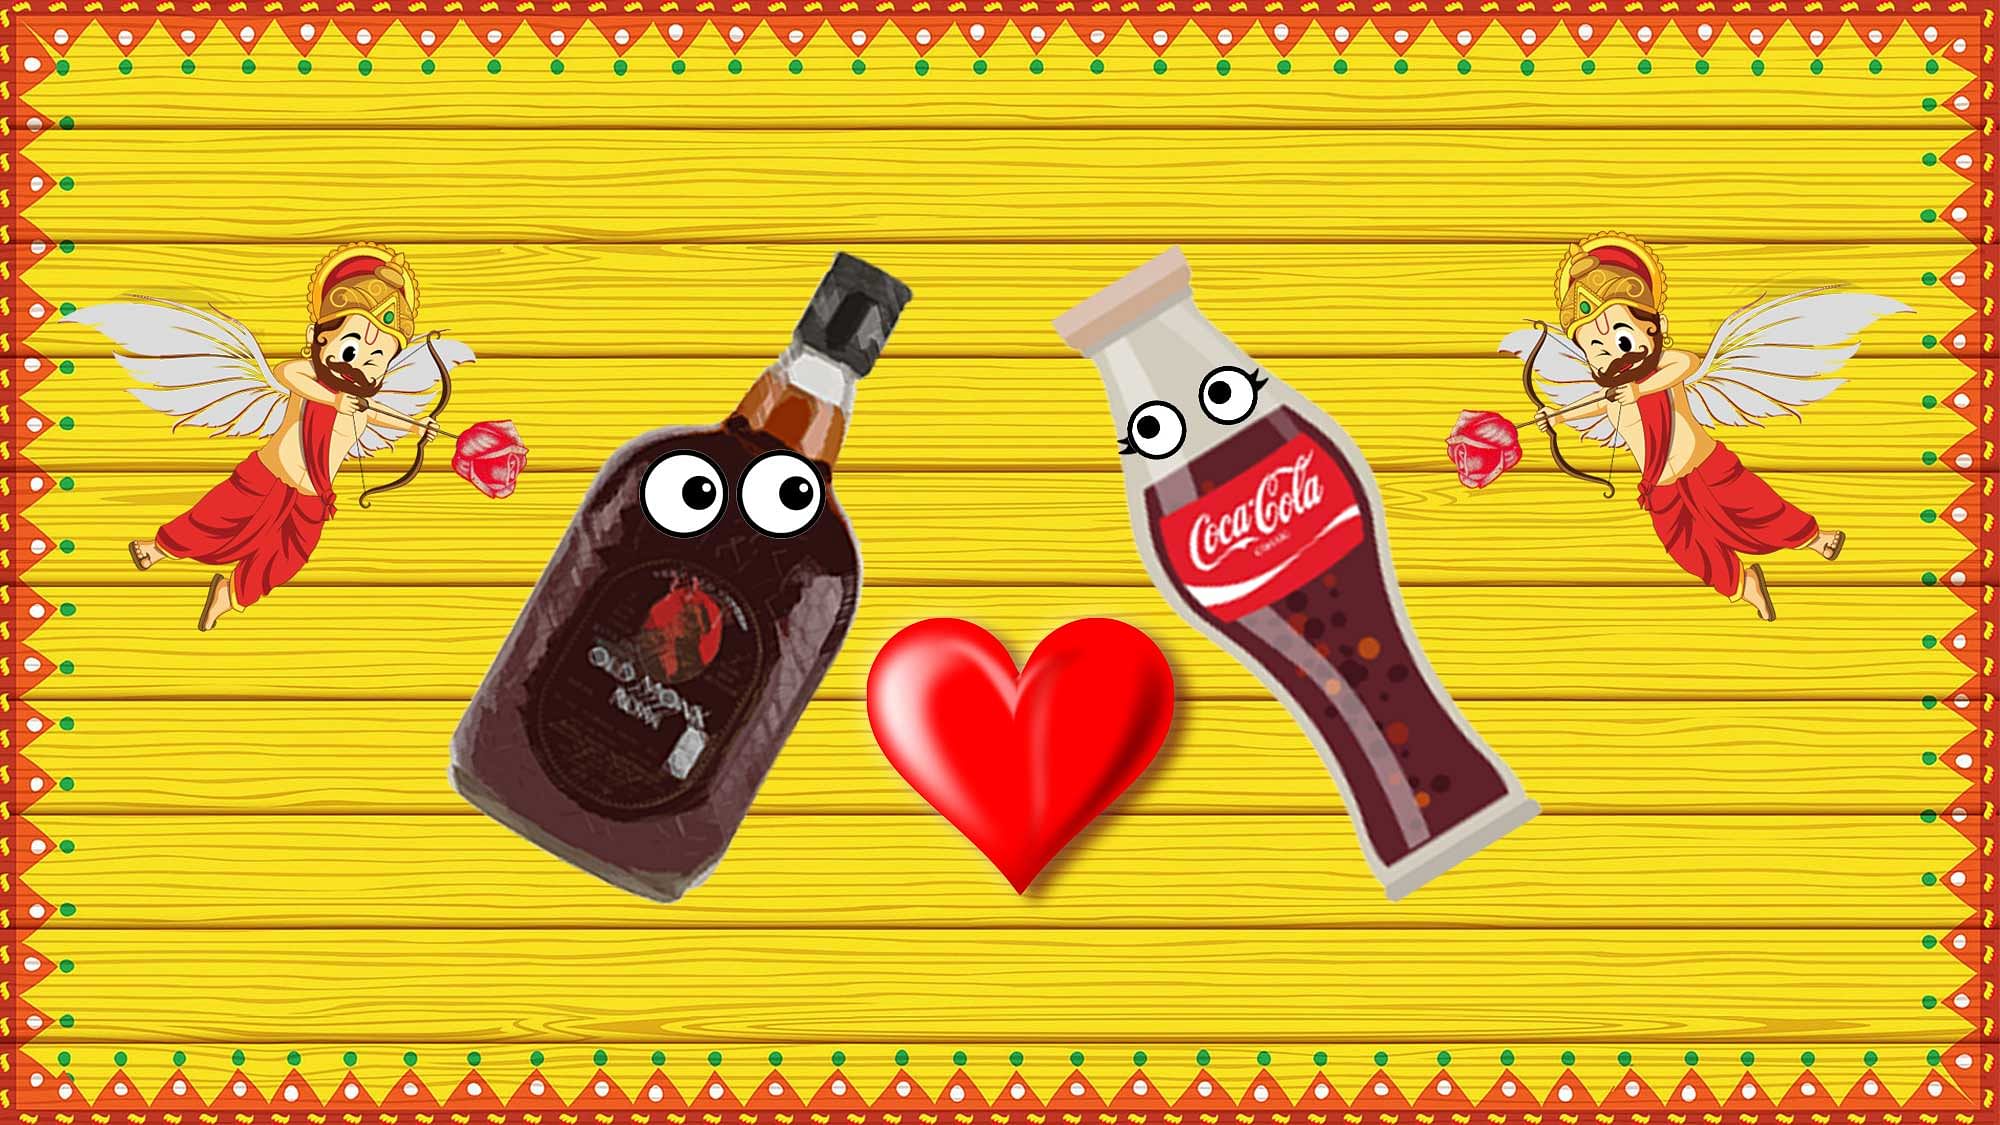 Rum and coke, the most romantic couple. (Photo: Lijumol Joseph/<b>The Quint</b>)